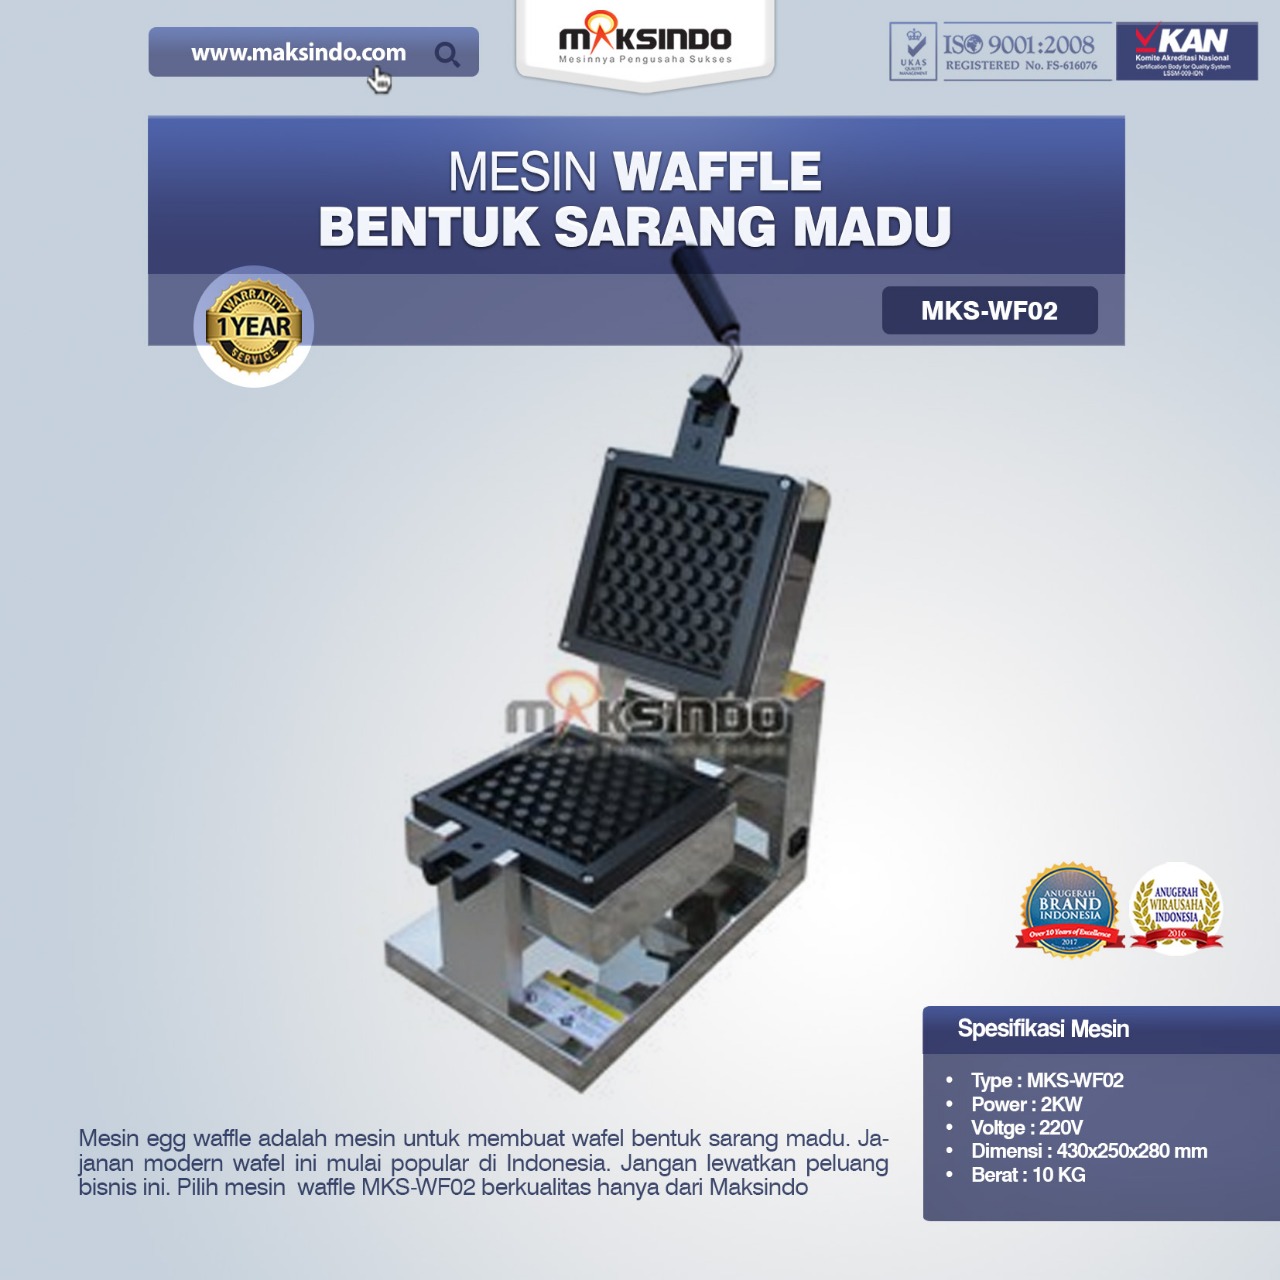 Jual Mesin Waffle Bentuk Sarang Madu MKS-WF02 di Malang